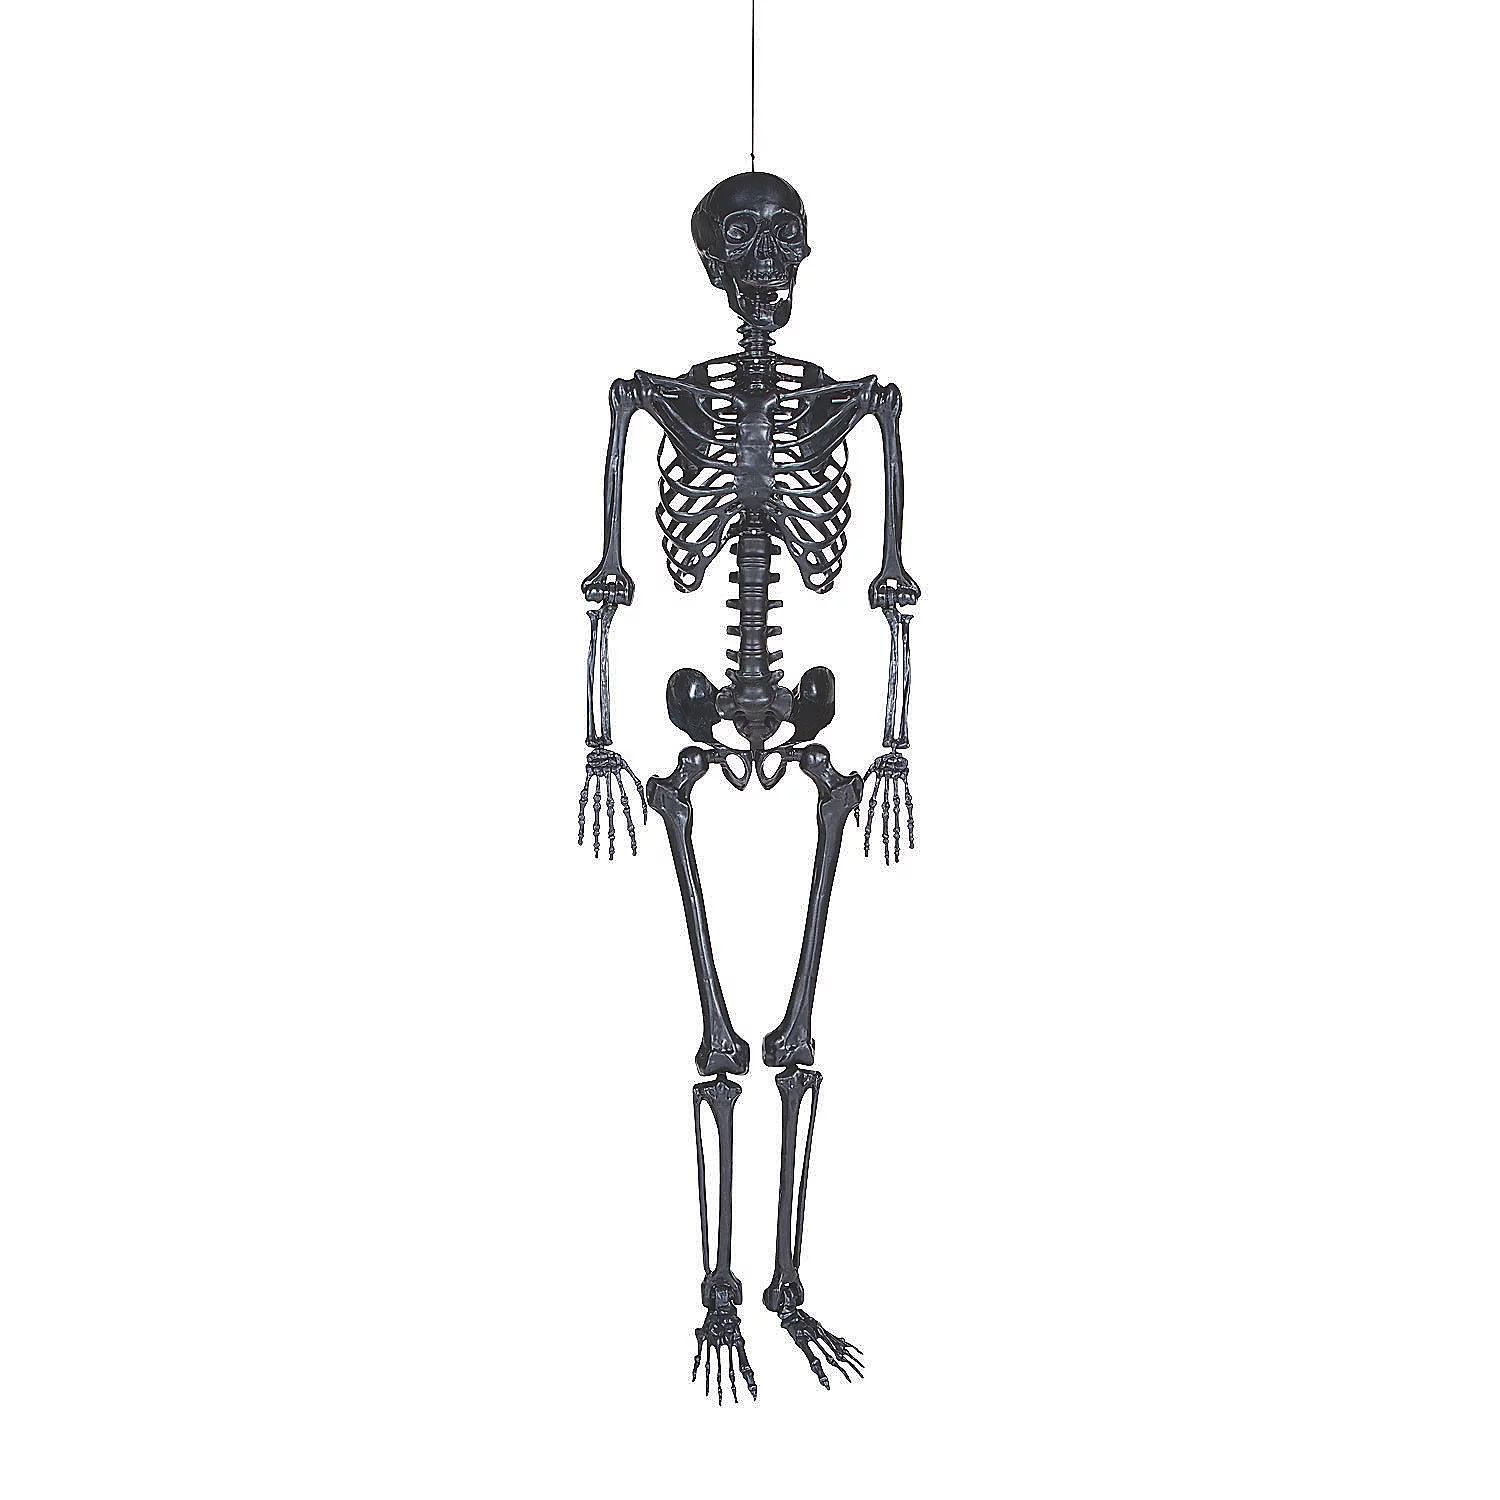 5 Foot Posable Black Skeleton - Home Decor - 1 Piece | Walmart (US)